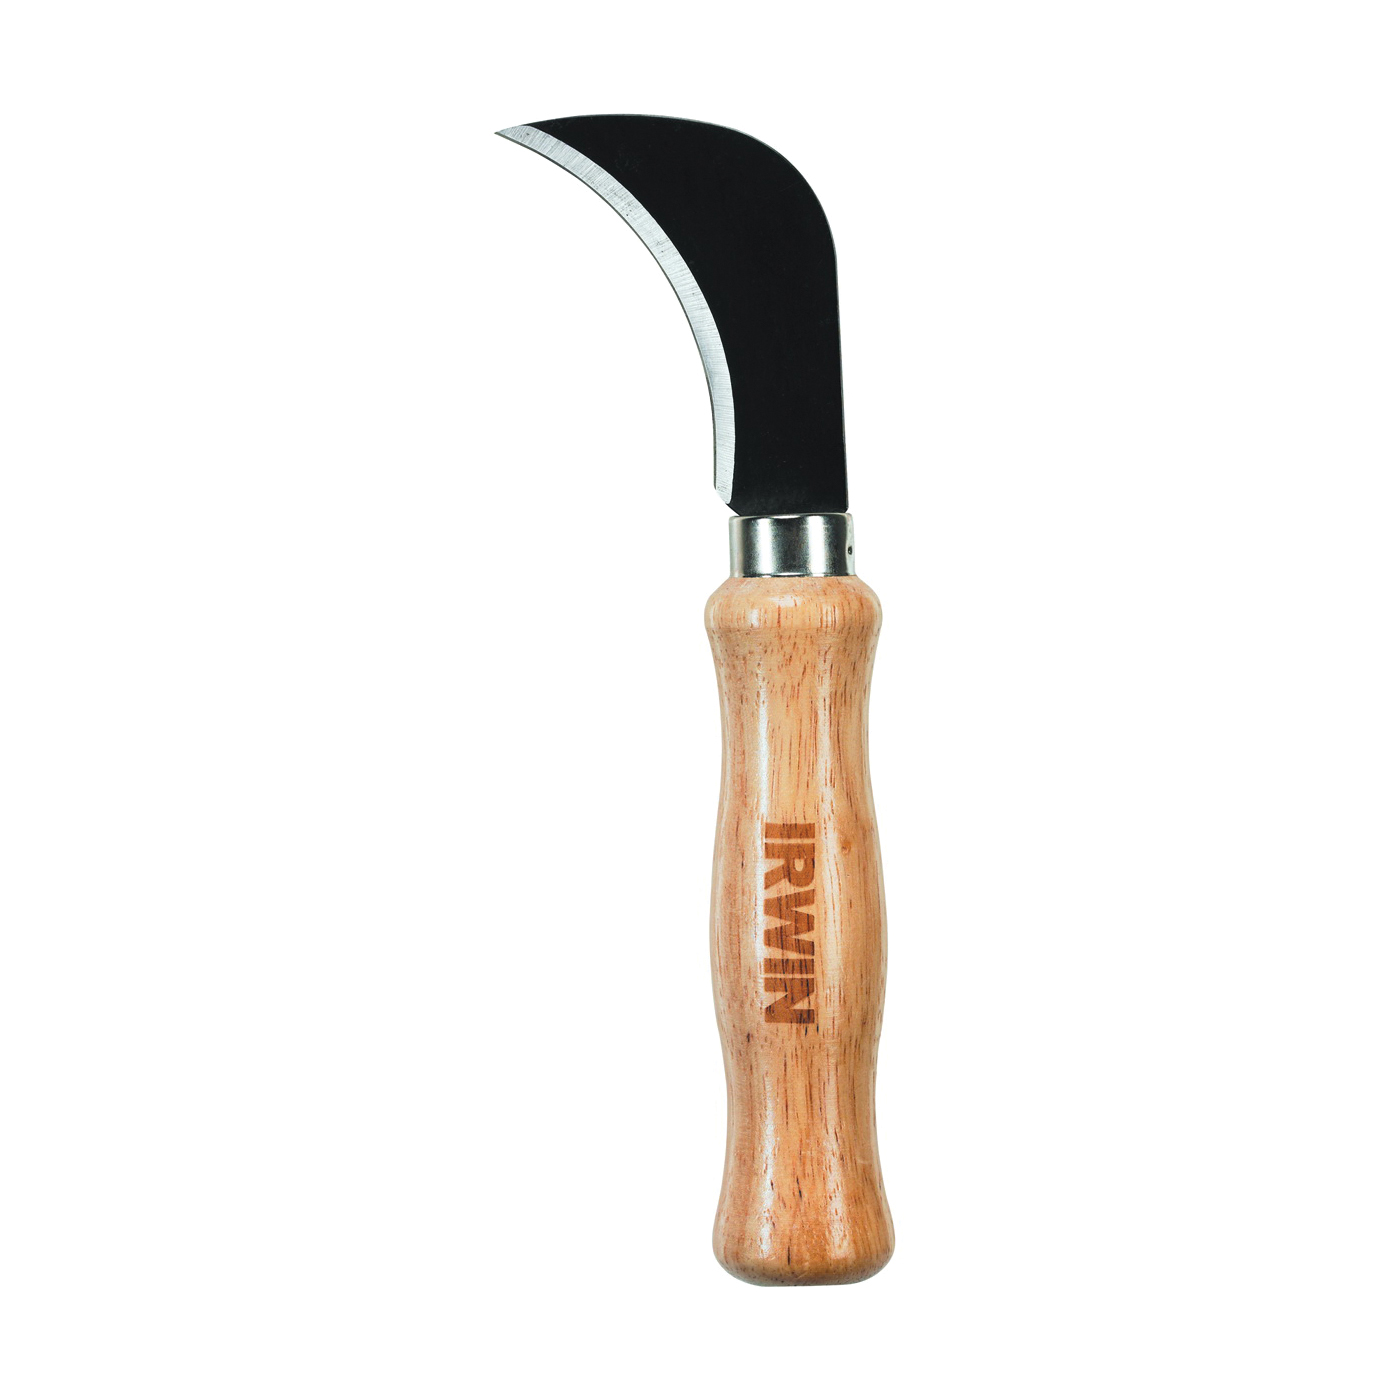 IRWIN 1774108 Utility Knife, 1-1/2 in L Blade, Steel Blade, Smooth Handle, Brown Handle - 1